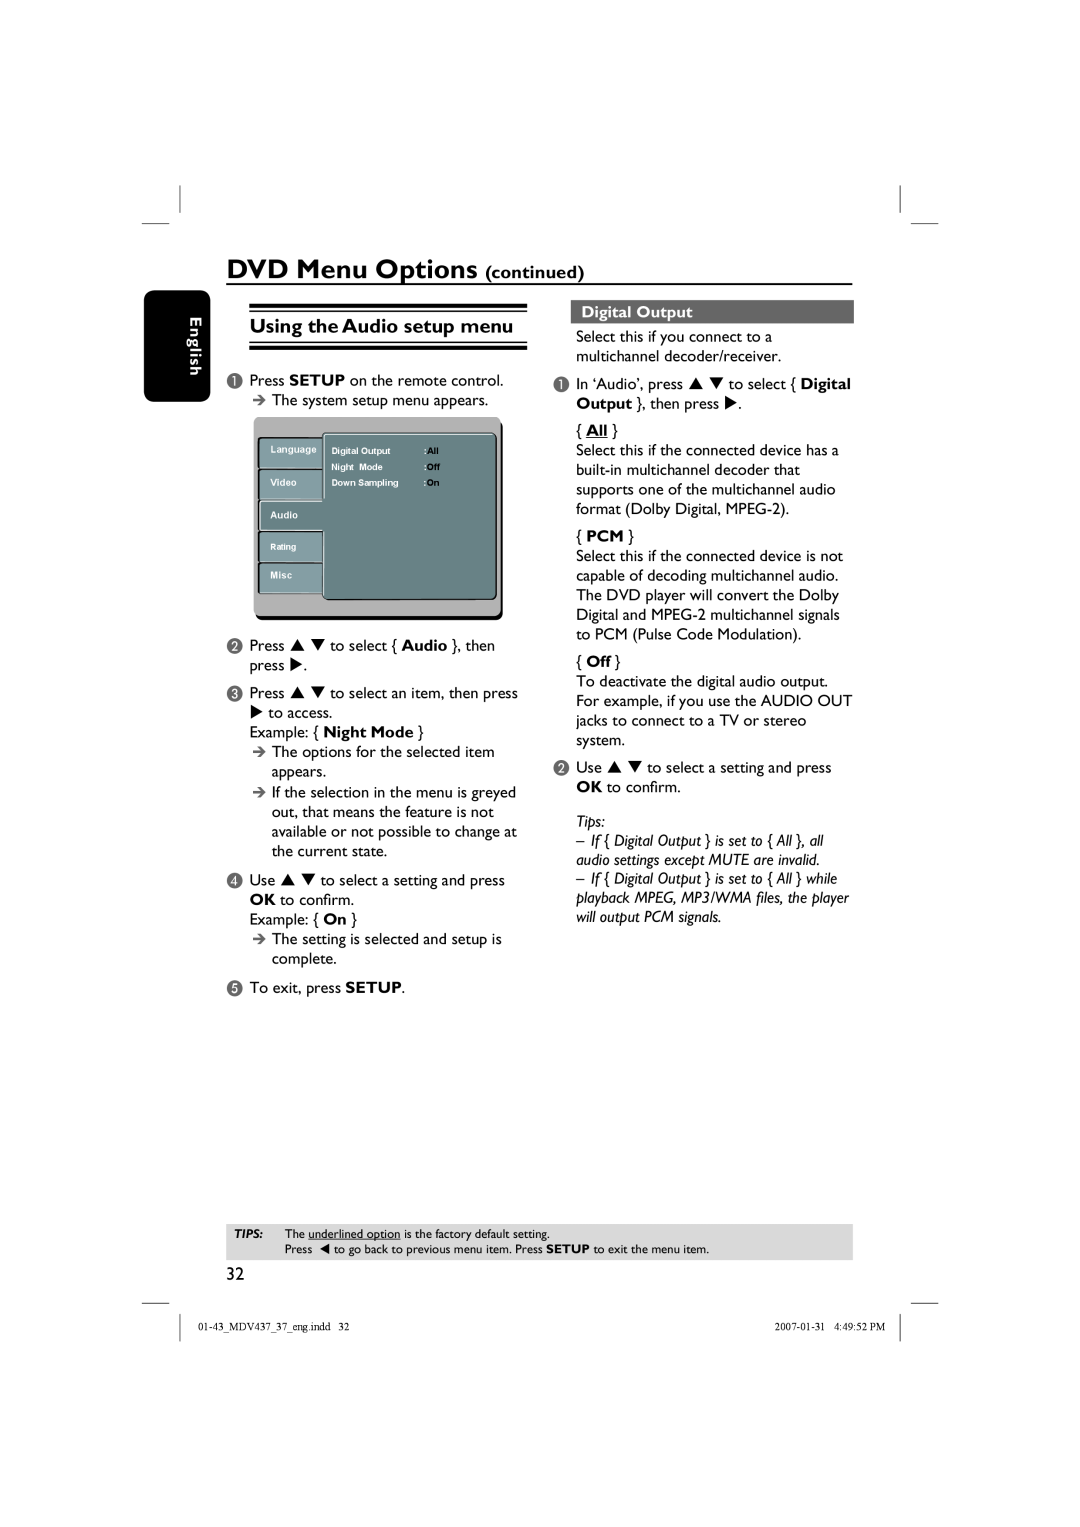 Magnavox MDV437 manual Using the Audio setup menu, Digital Output, DVD Menu Options continued, English, Tips 